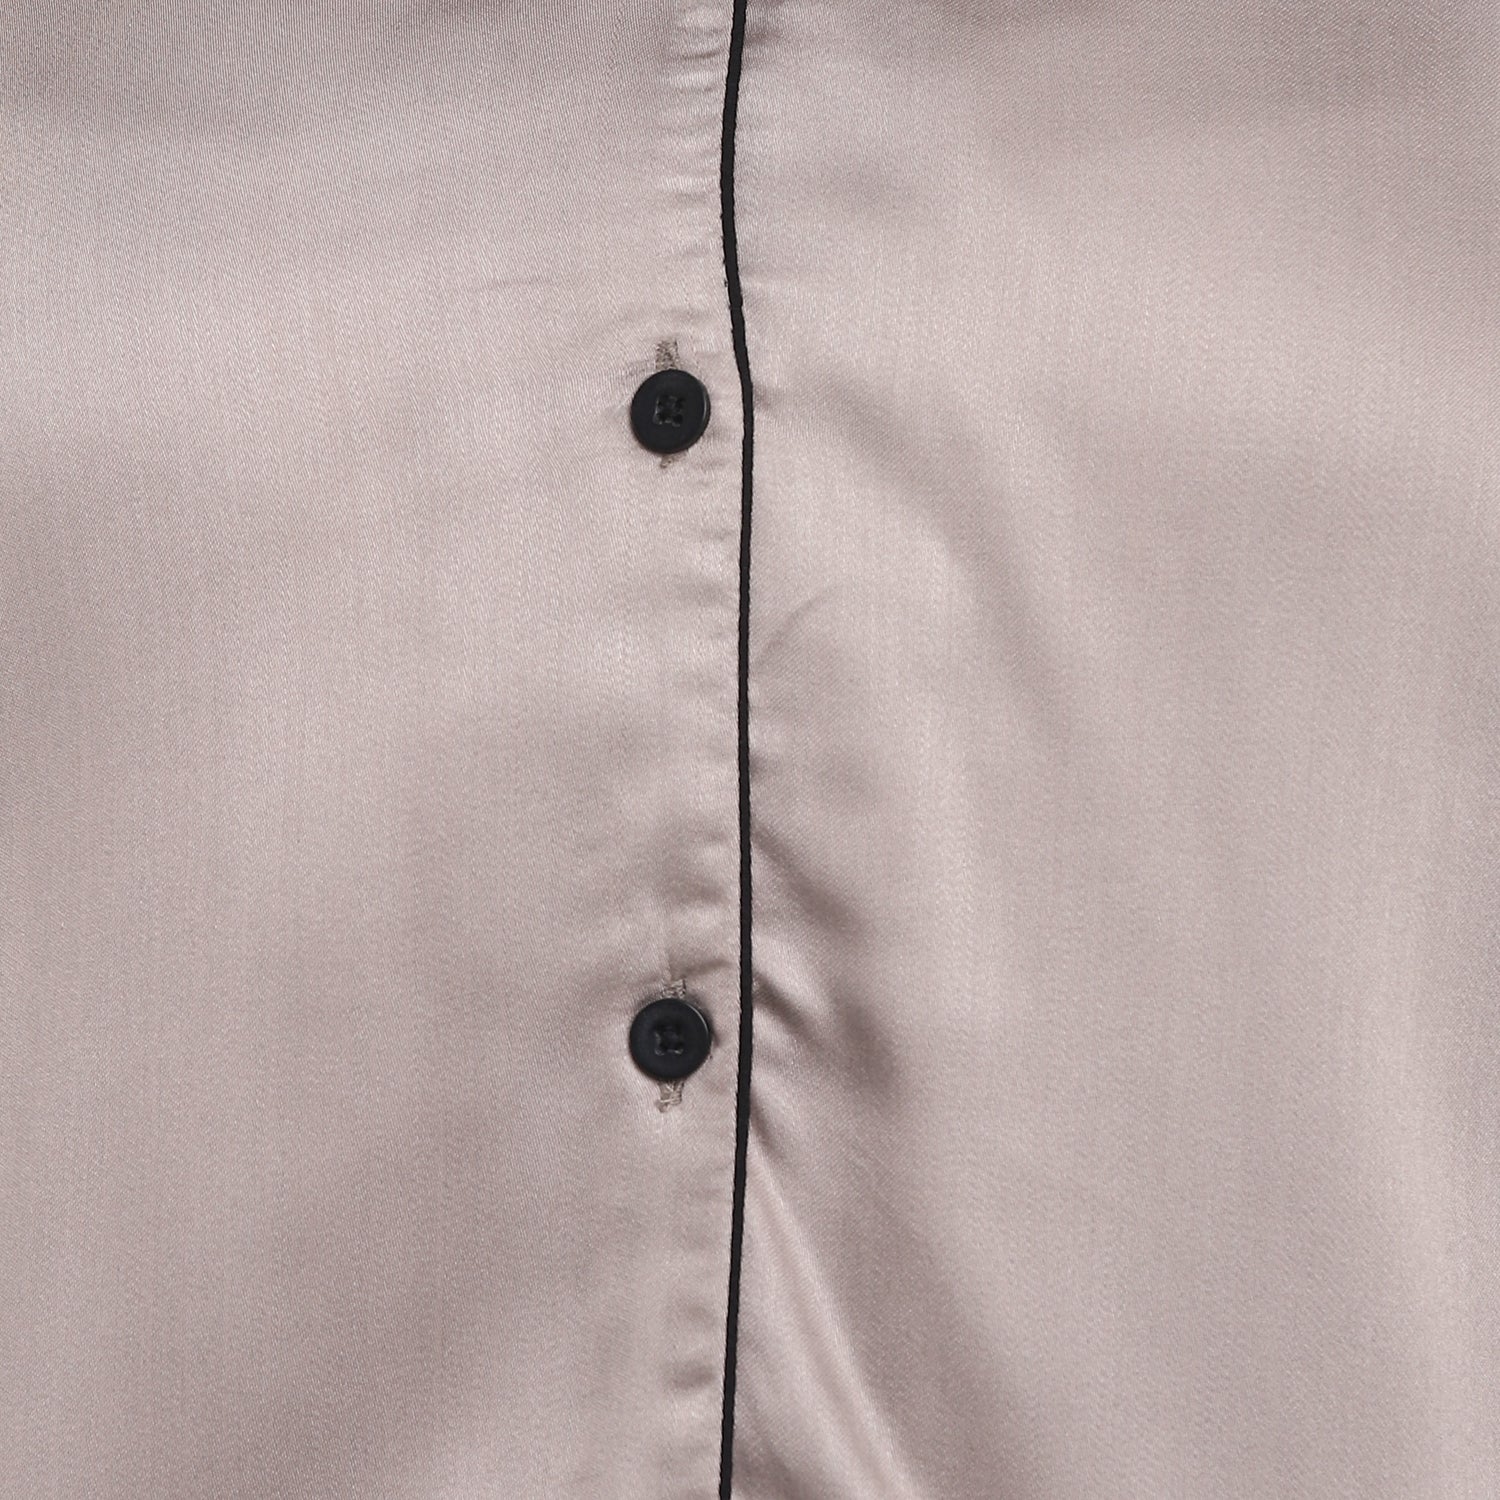 Ultra Soft Light Grey Modal Satin Long Sleeve Women's Night Suit - Shopbloom